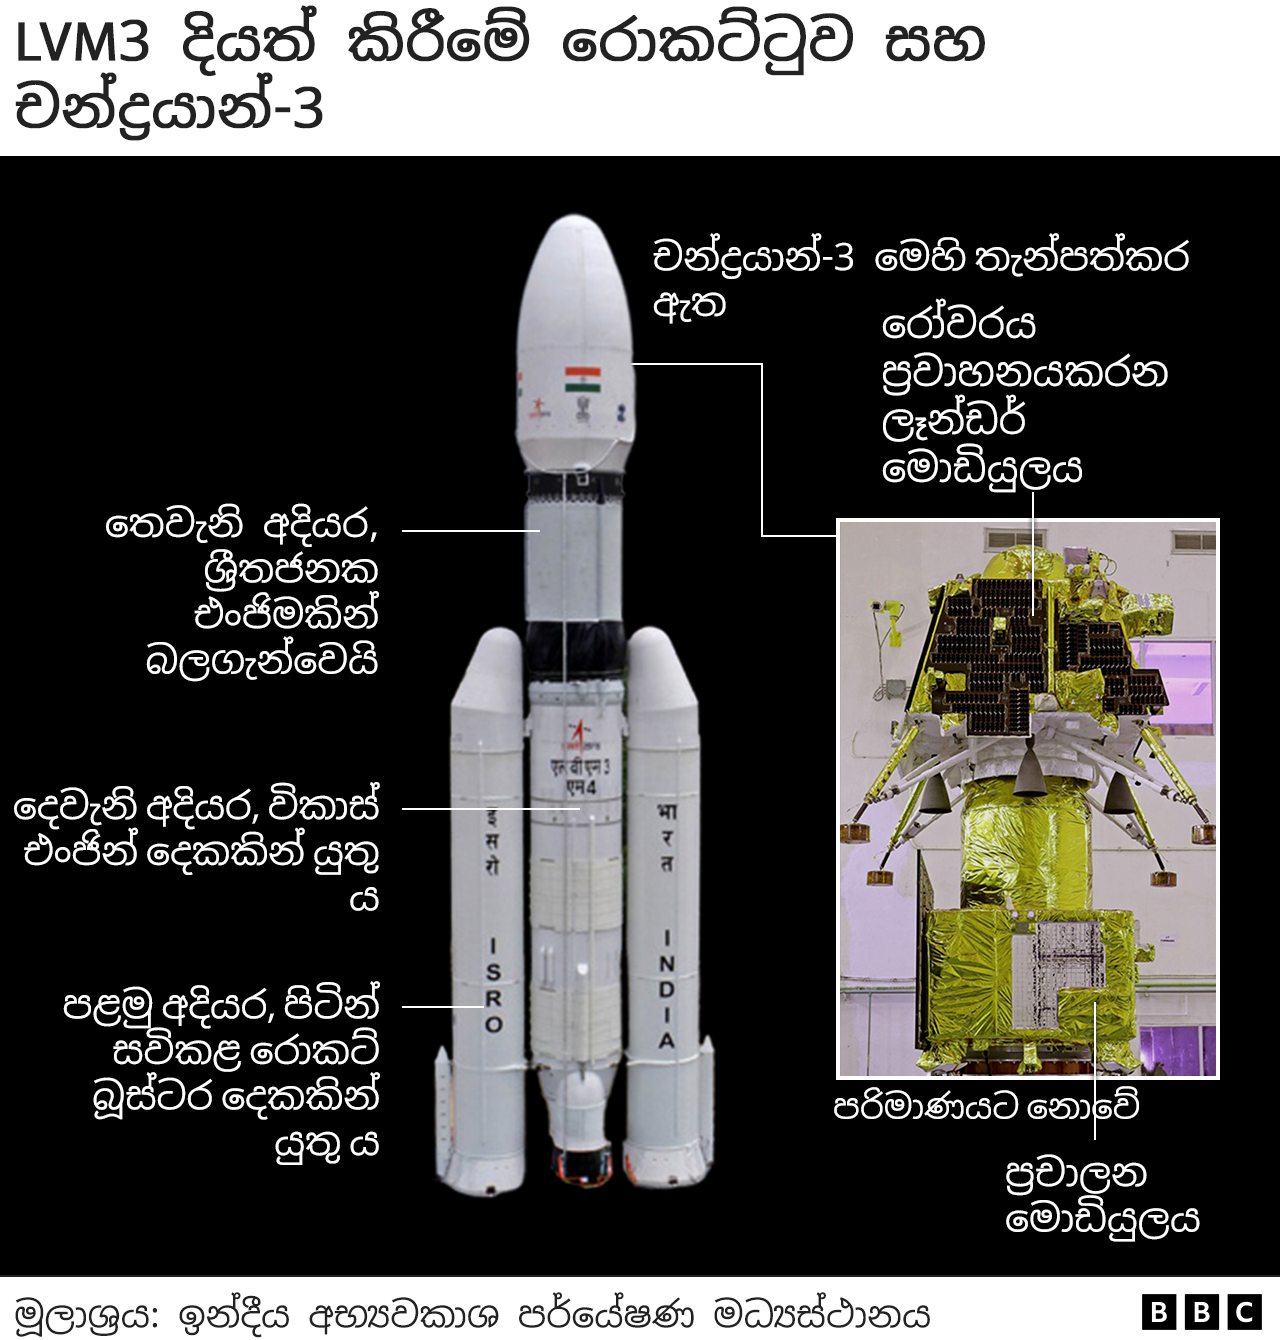 LVM3 launch rocket and Chandrayaan-3